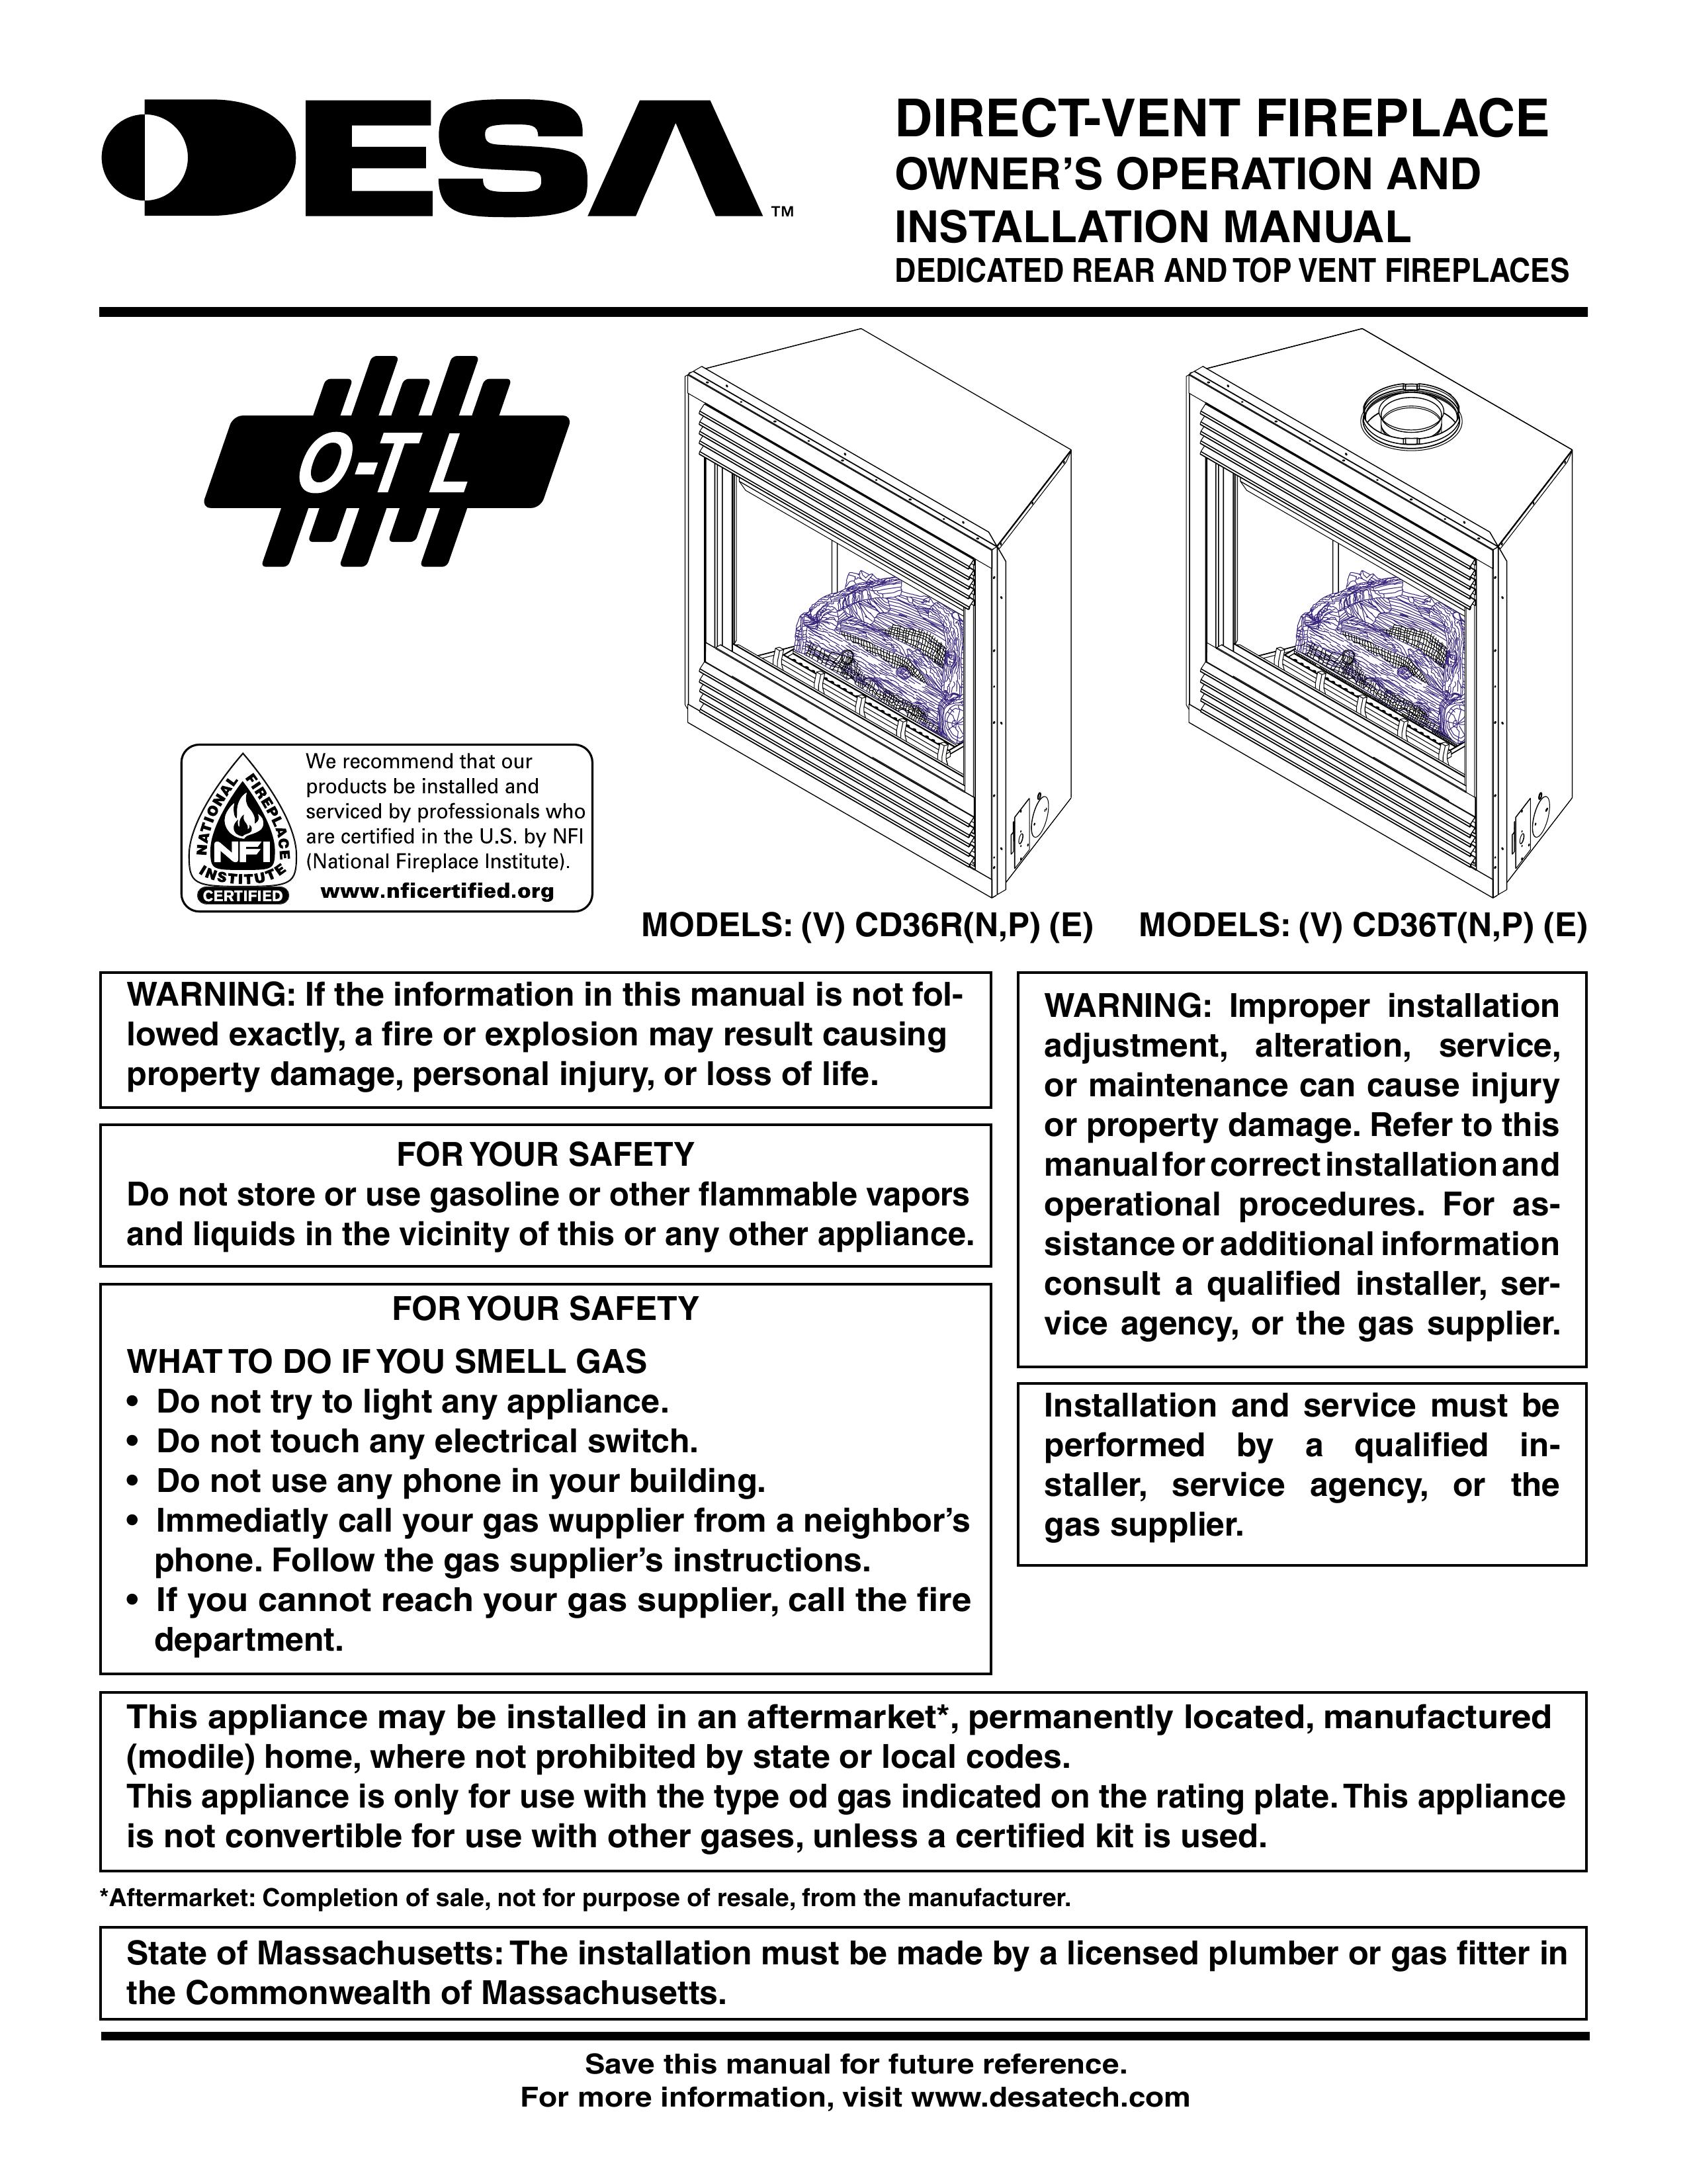 Desa (V) CD36T(N Outdoor Fireplace User Manual